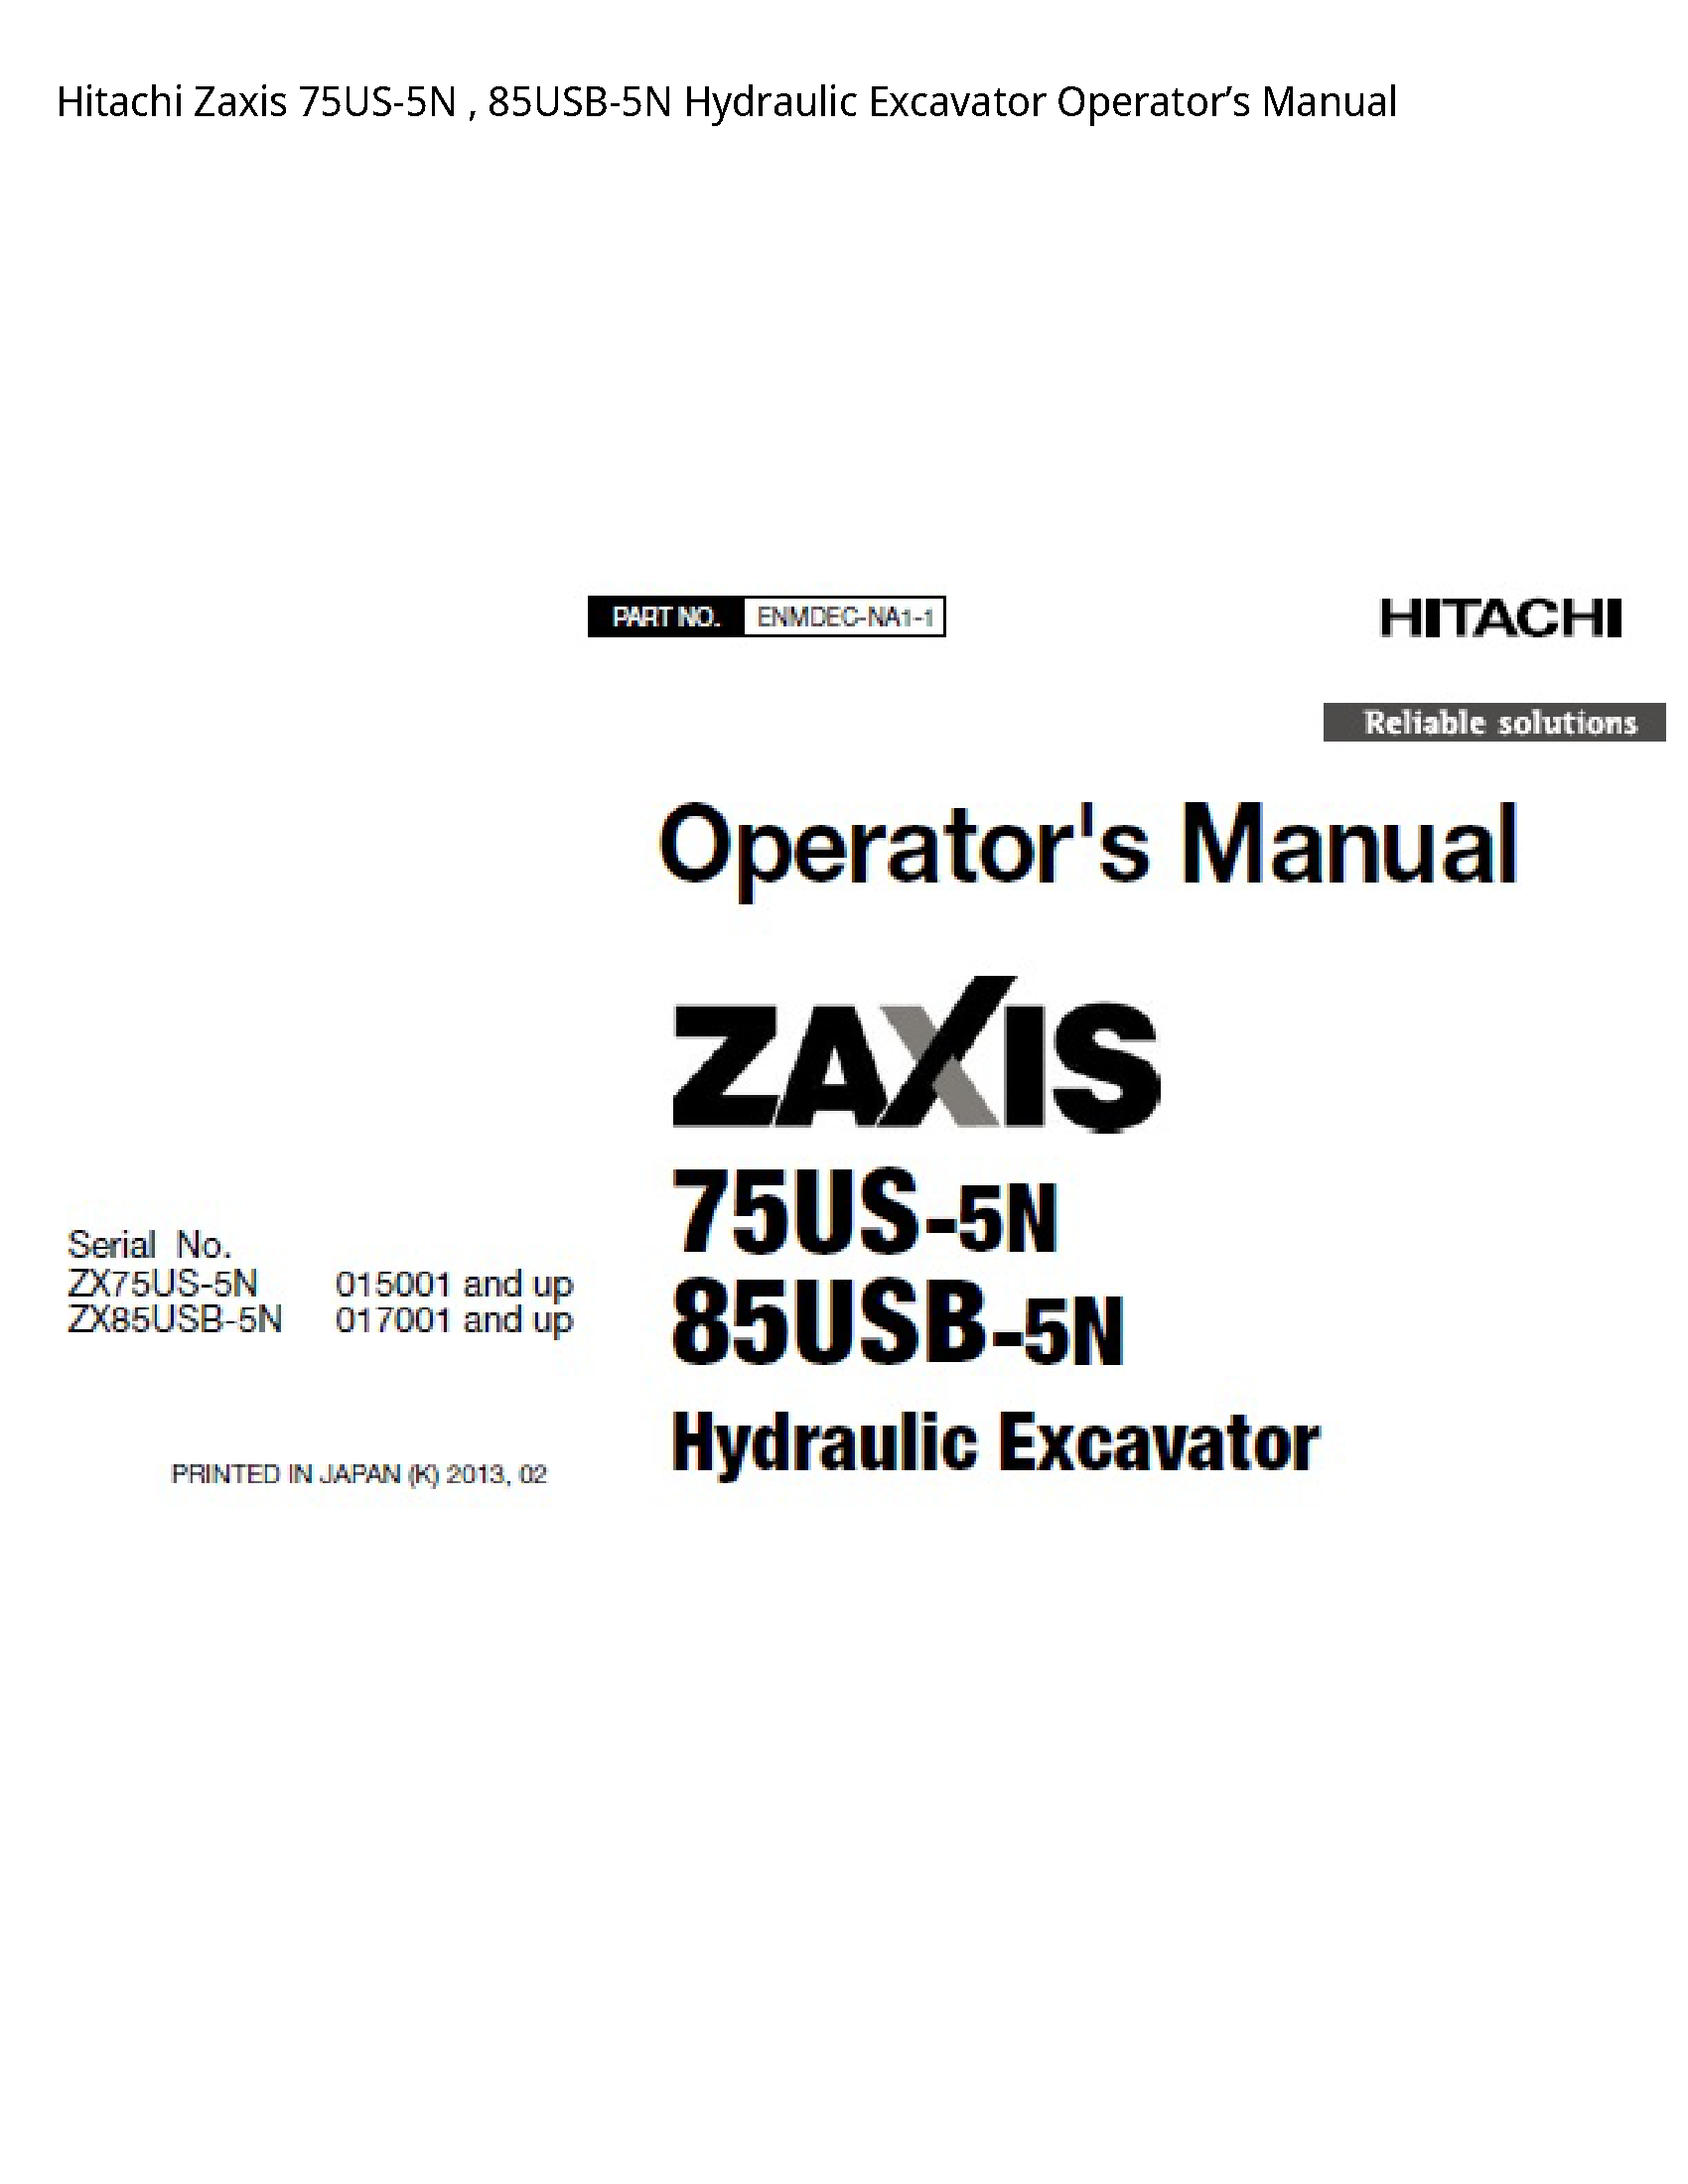 Hitachi 75US-5N Zaxis Hydraulic Excavator Operator’s manual